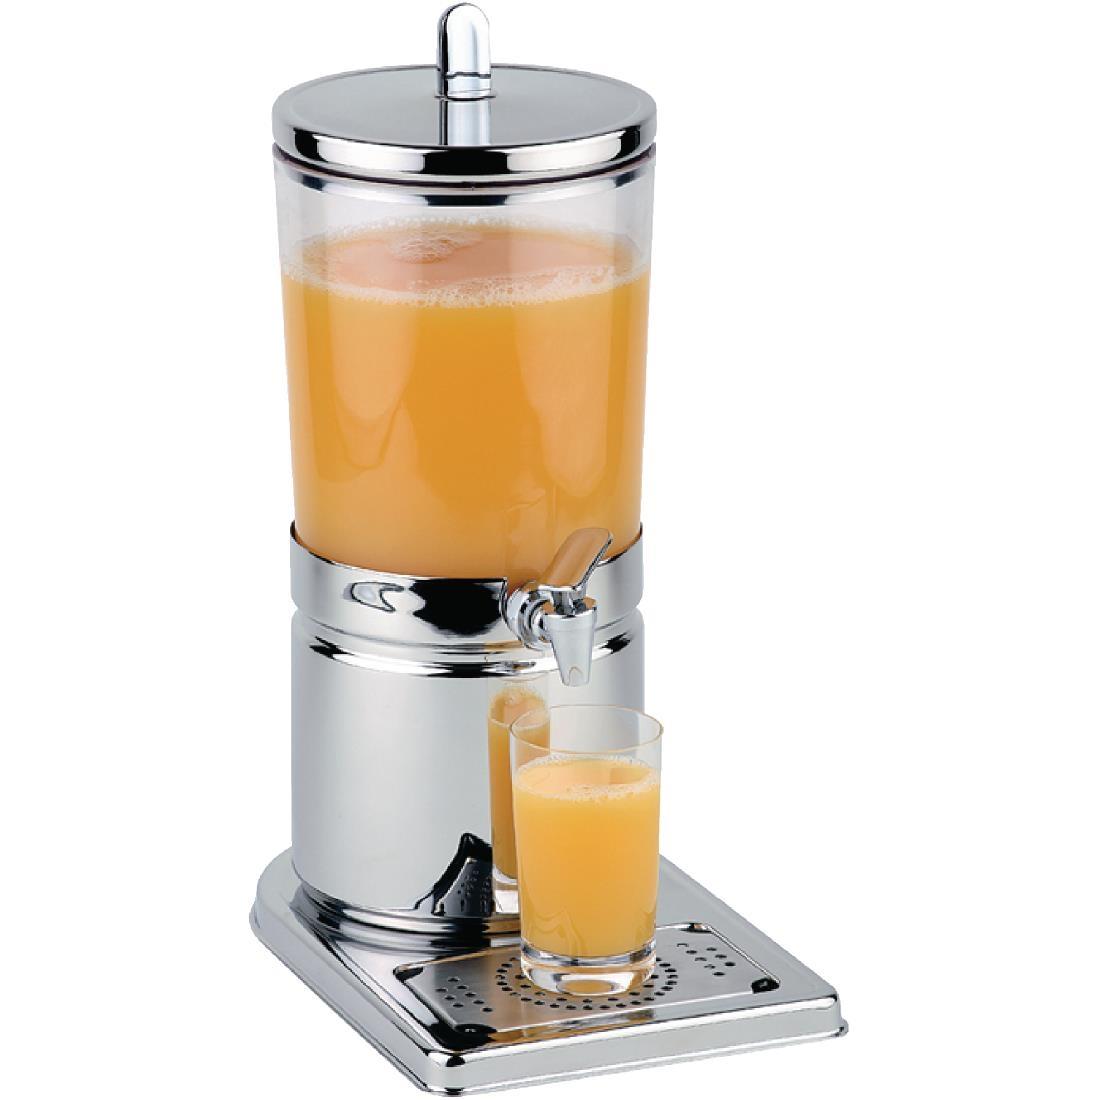 APS Breakfast Service Set with Cereal Dispenser, Juice Dispenser and Baskets - S957  - 2